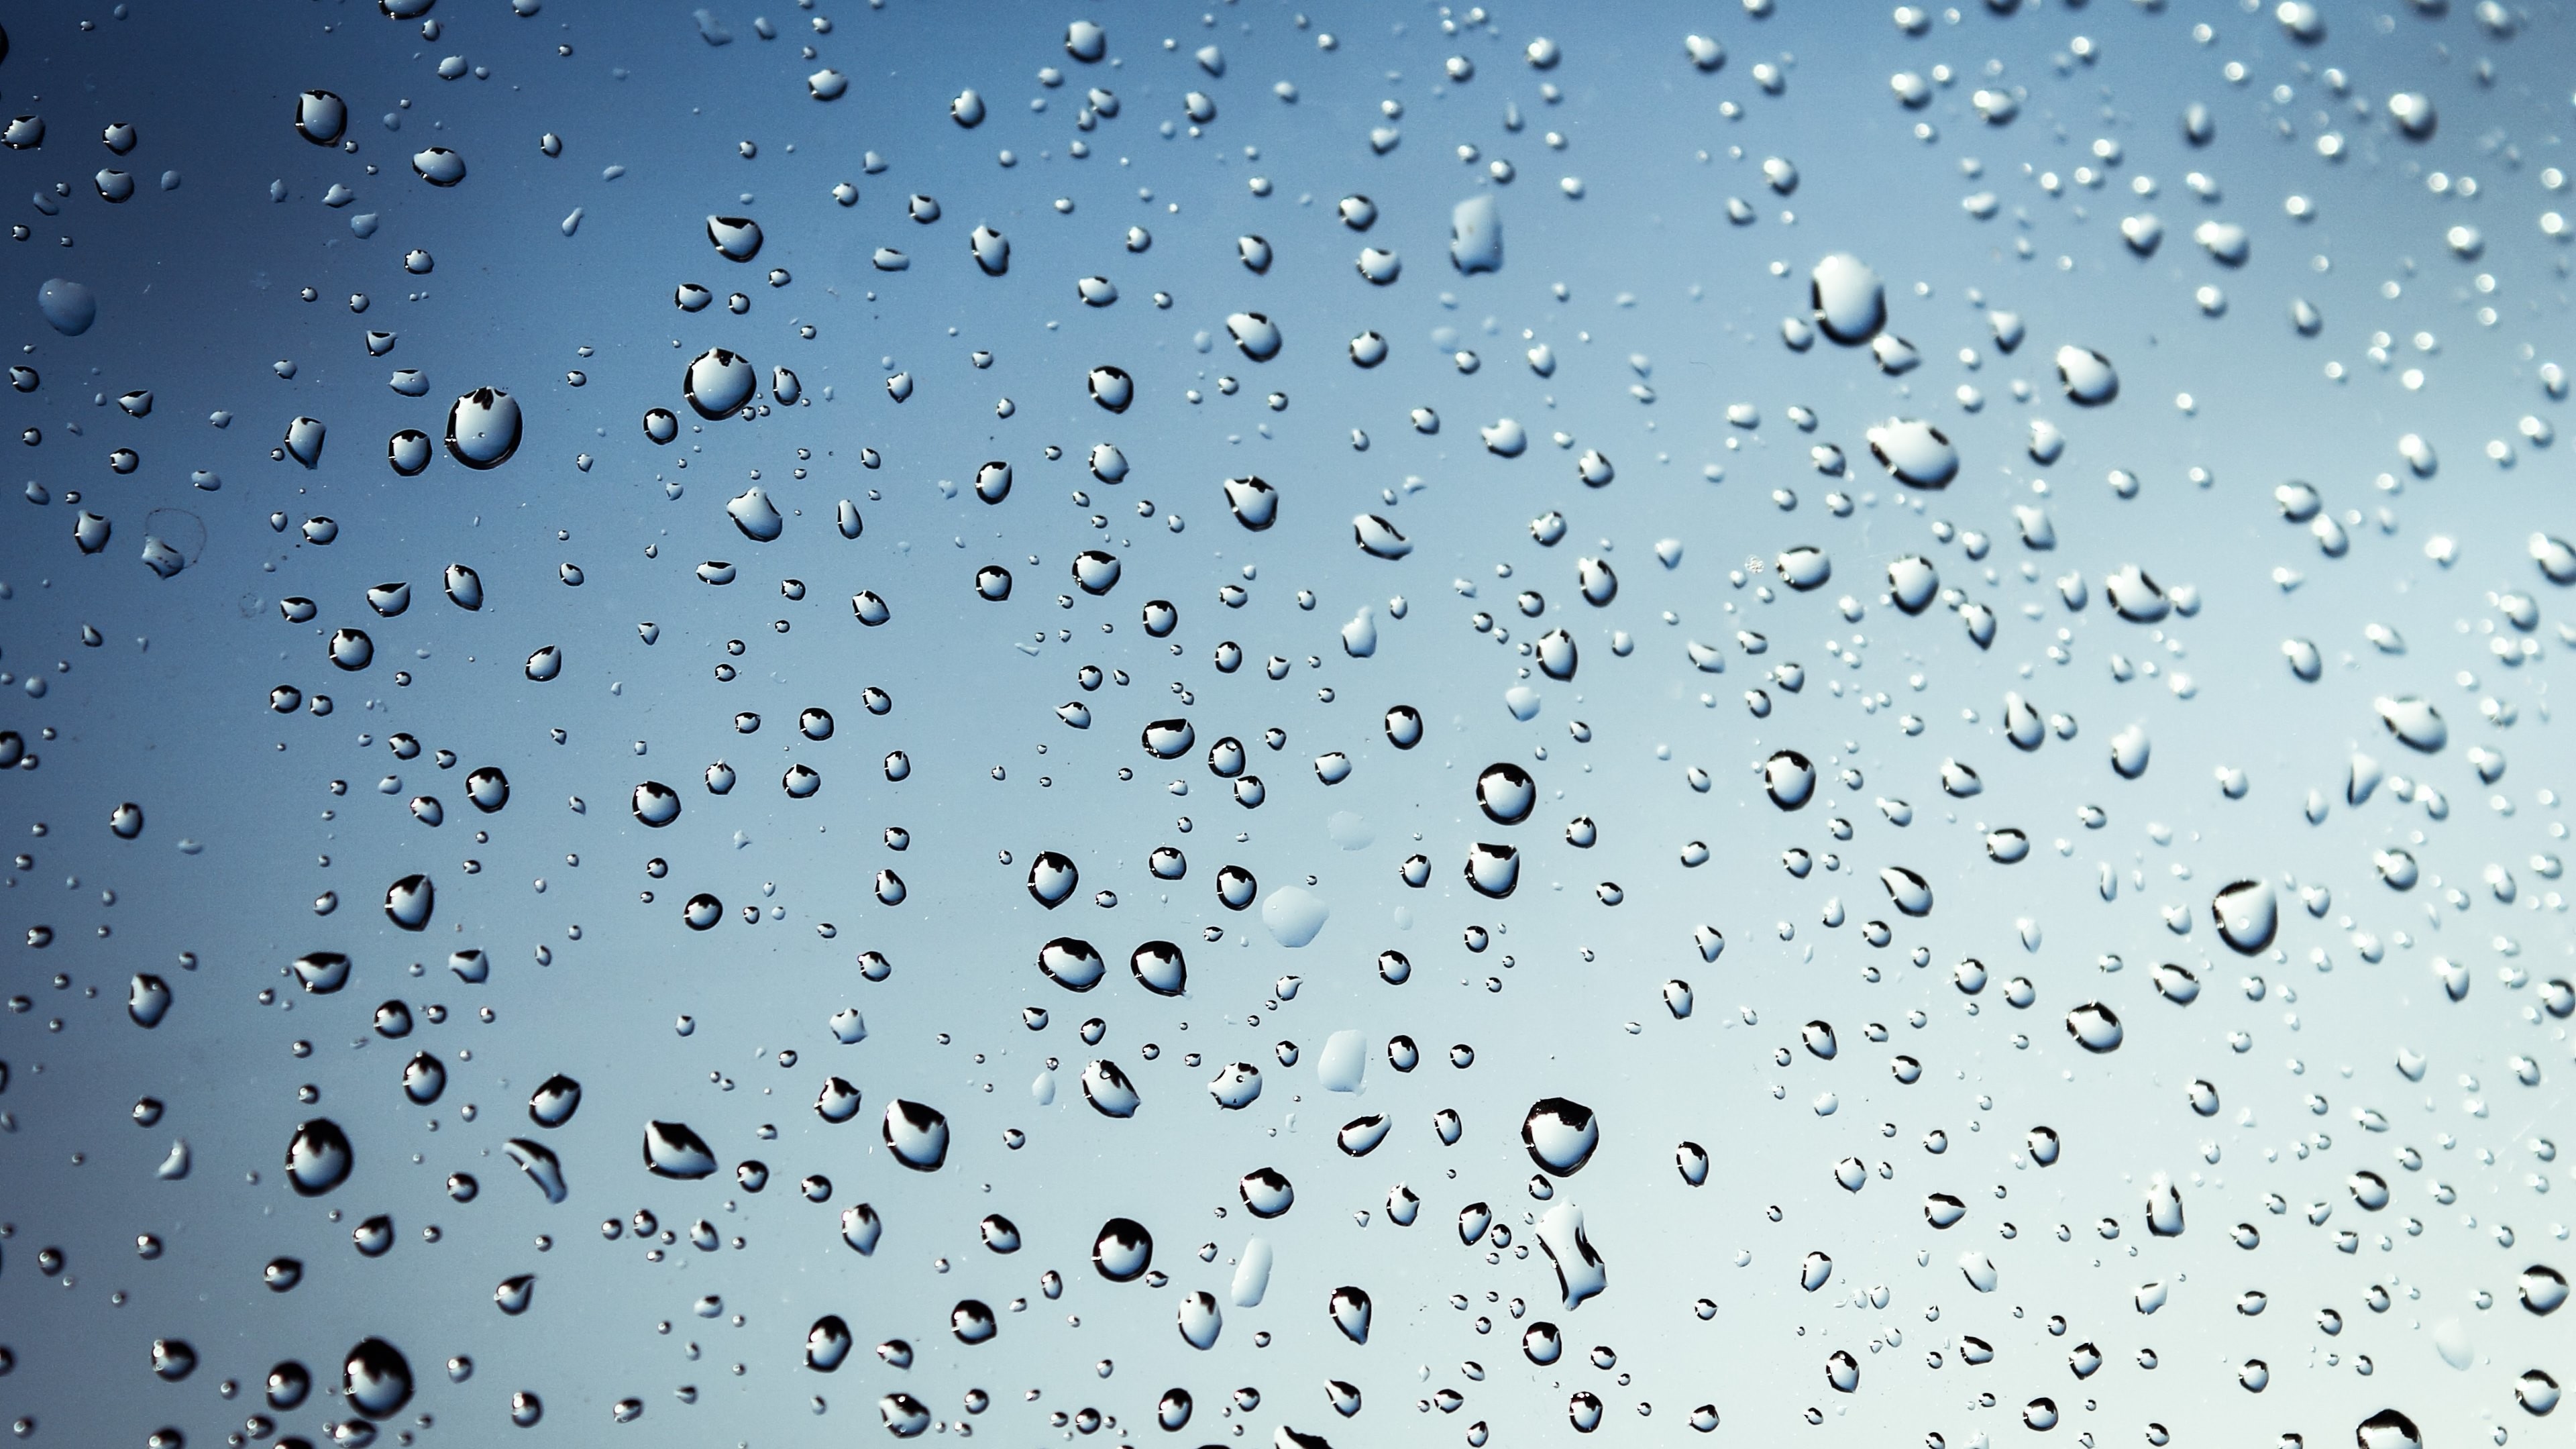 3840x2160 Wallpaper: Rain Drops on Window